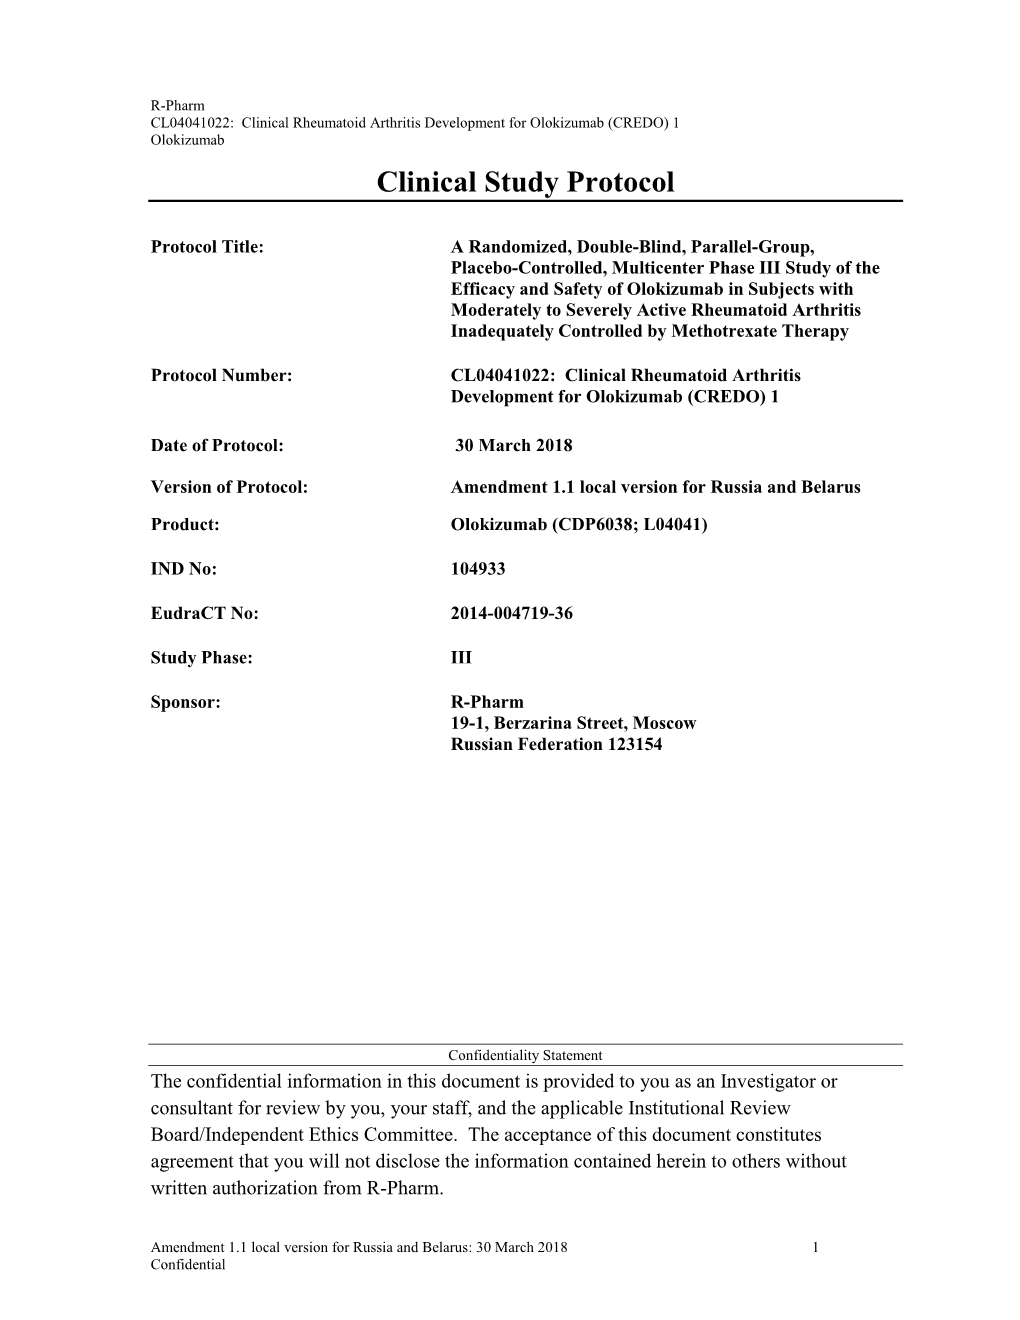 Quintiles Ph II-III Clinical Protocol